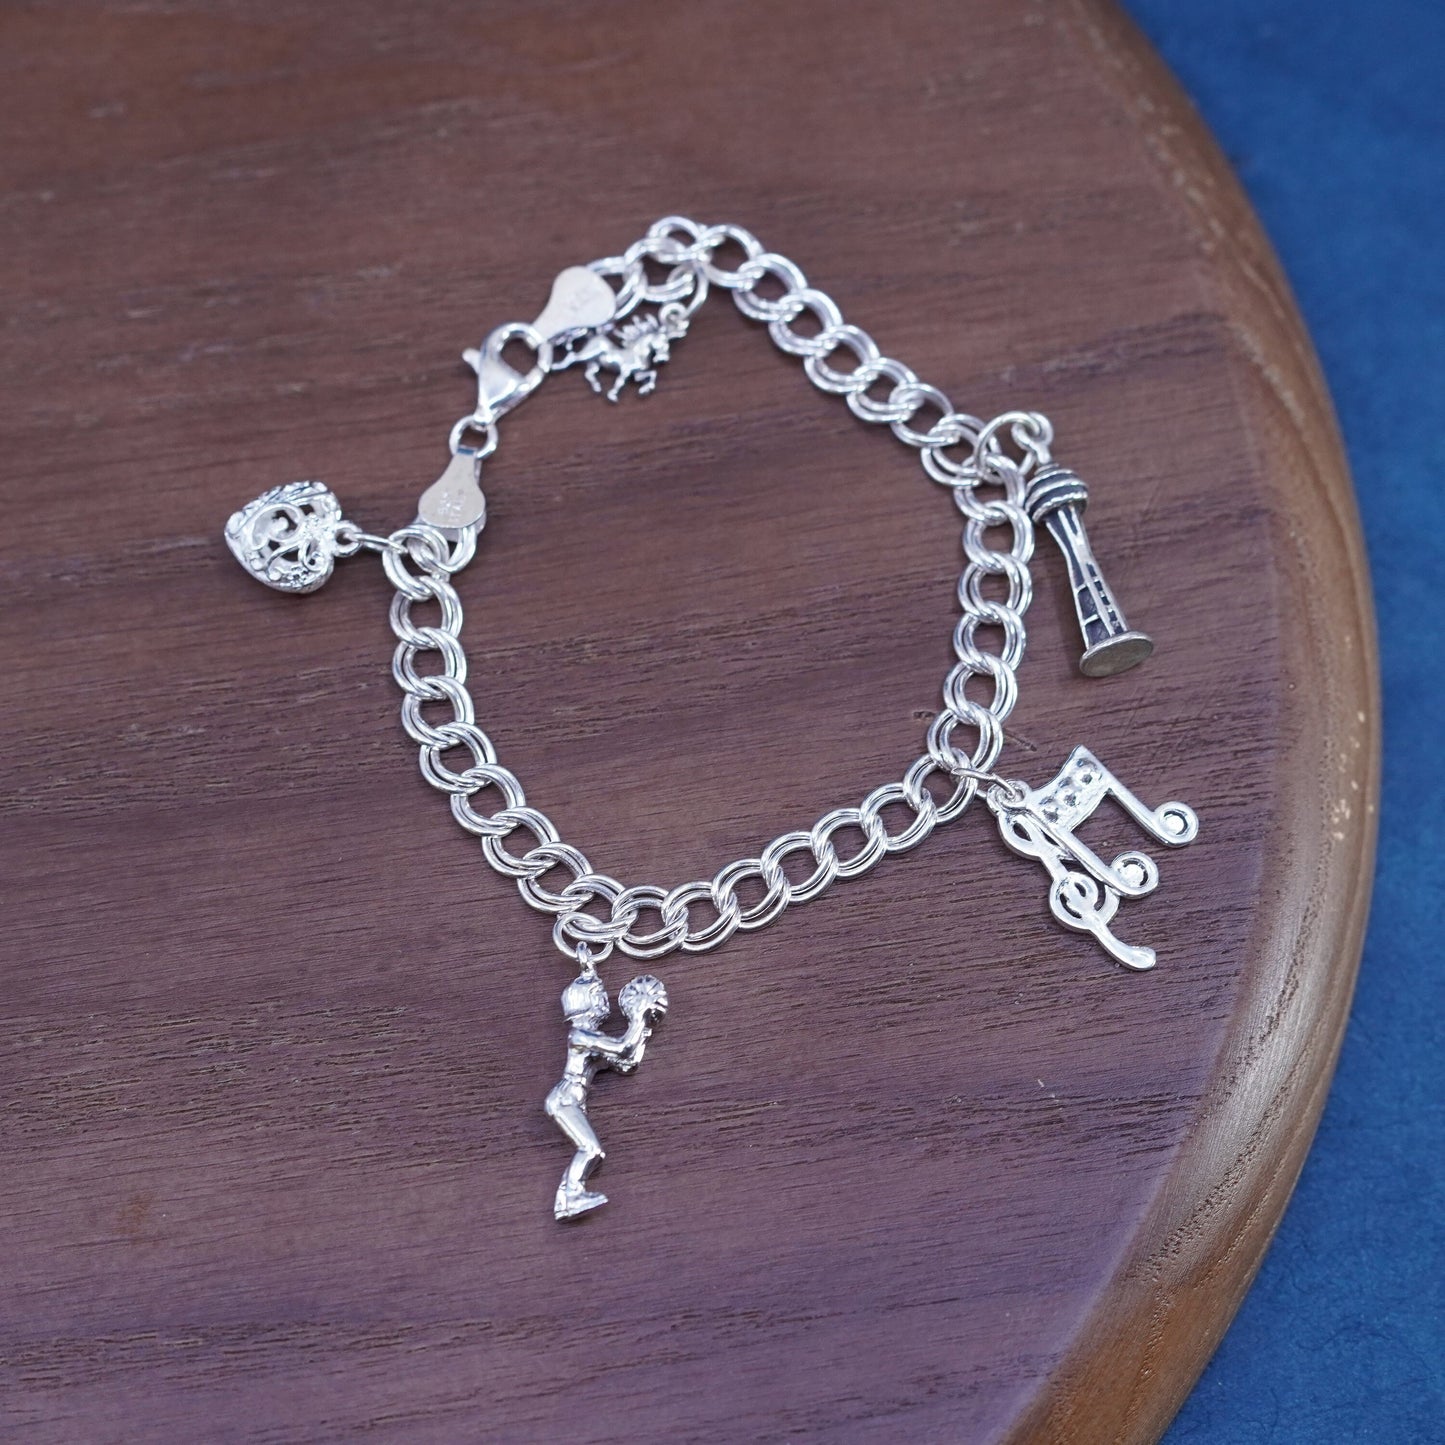 6.5”, Sterling silver 925 handmade bracelet, heart, Basketball player charms,